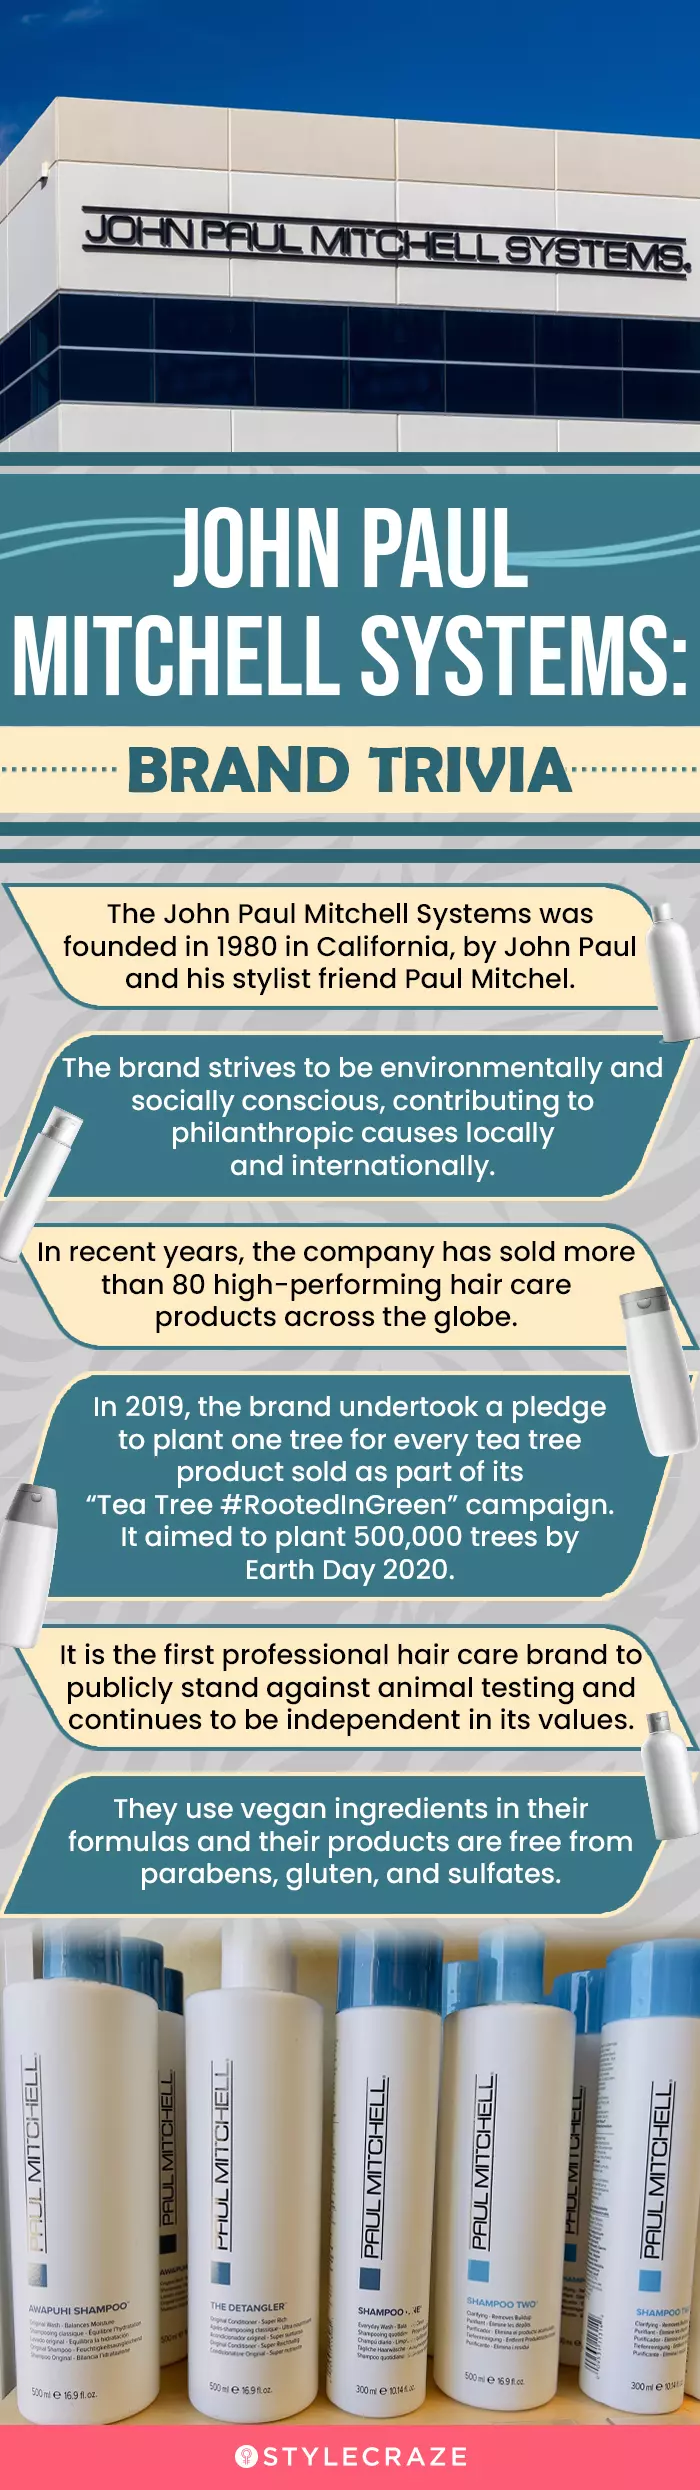 John Paul Mitchell Systems: Brand Trivia (infographic)